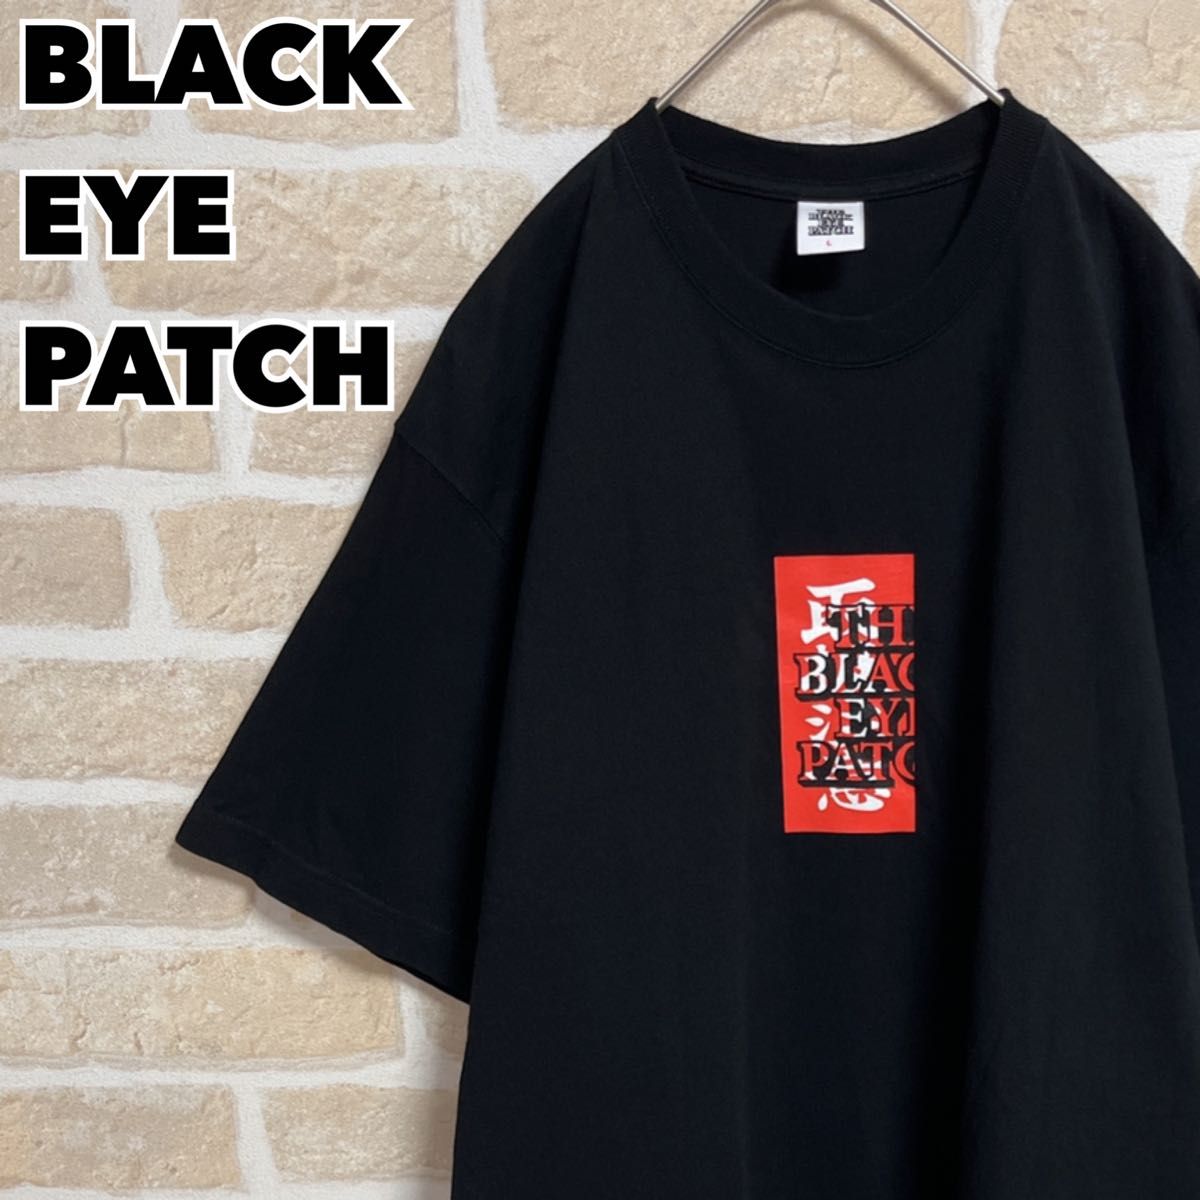 人気ショップ converse BLACK slip EYE patch 100 PATCH ox US9